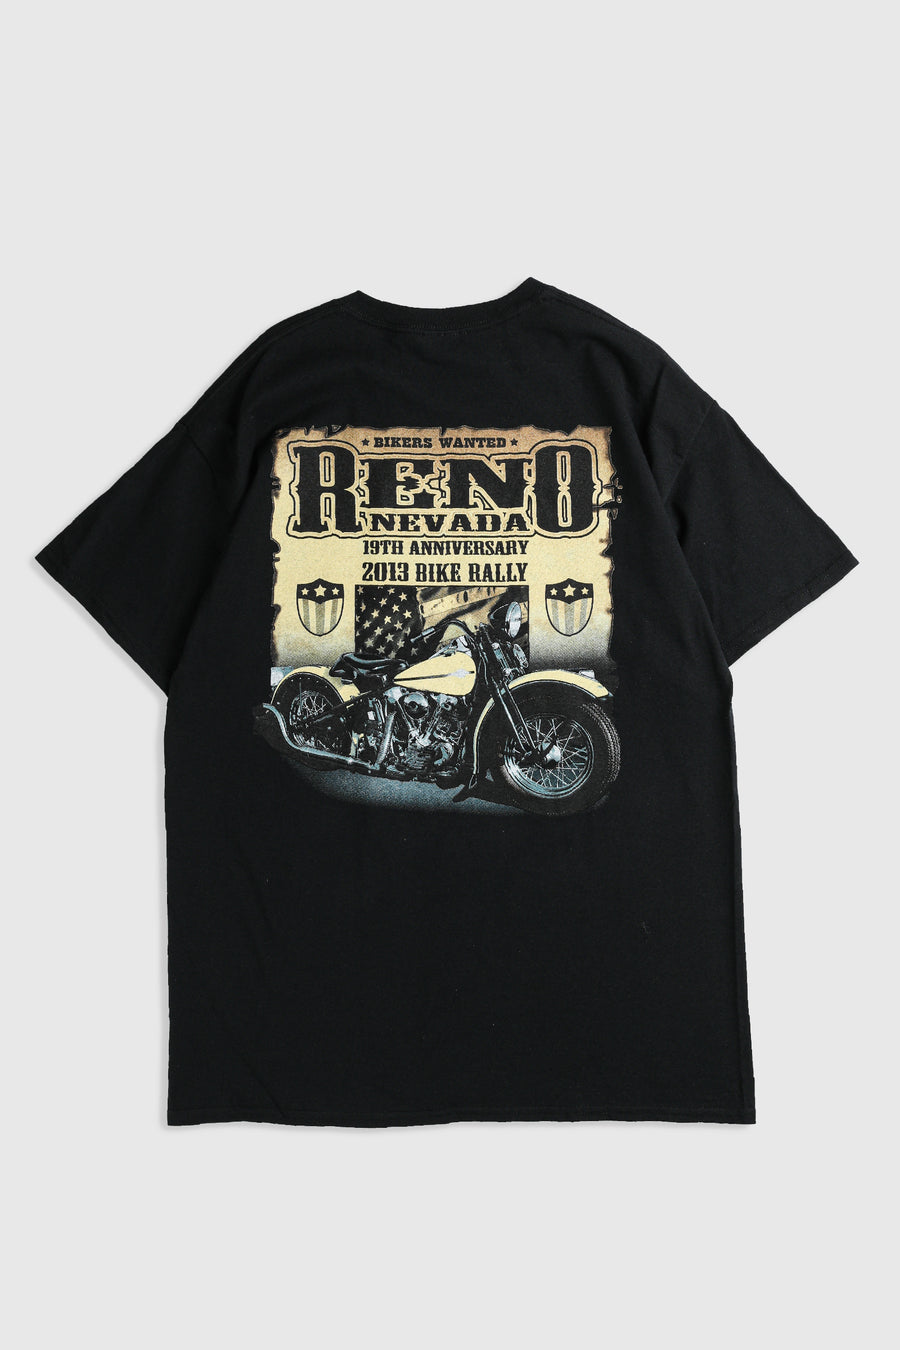 Deadstock Reno Bike Rally Tee - L